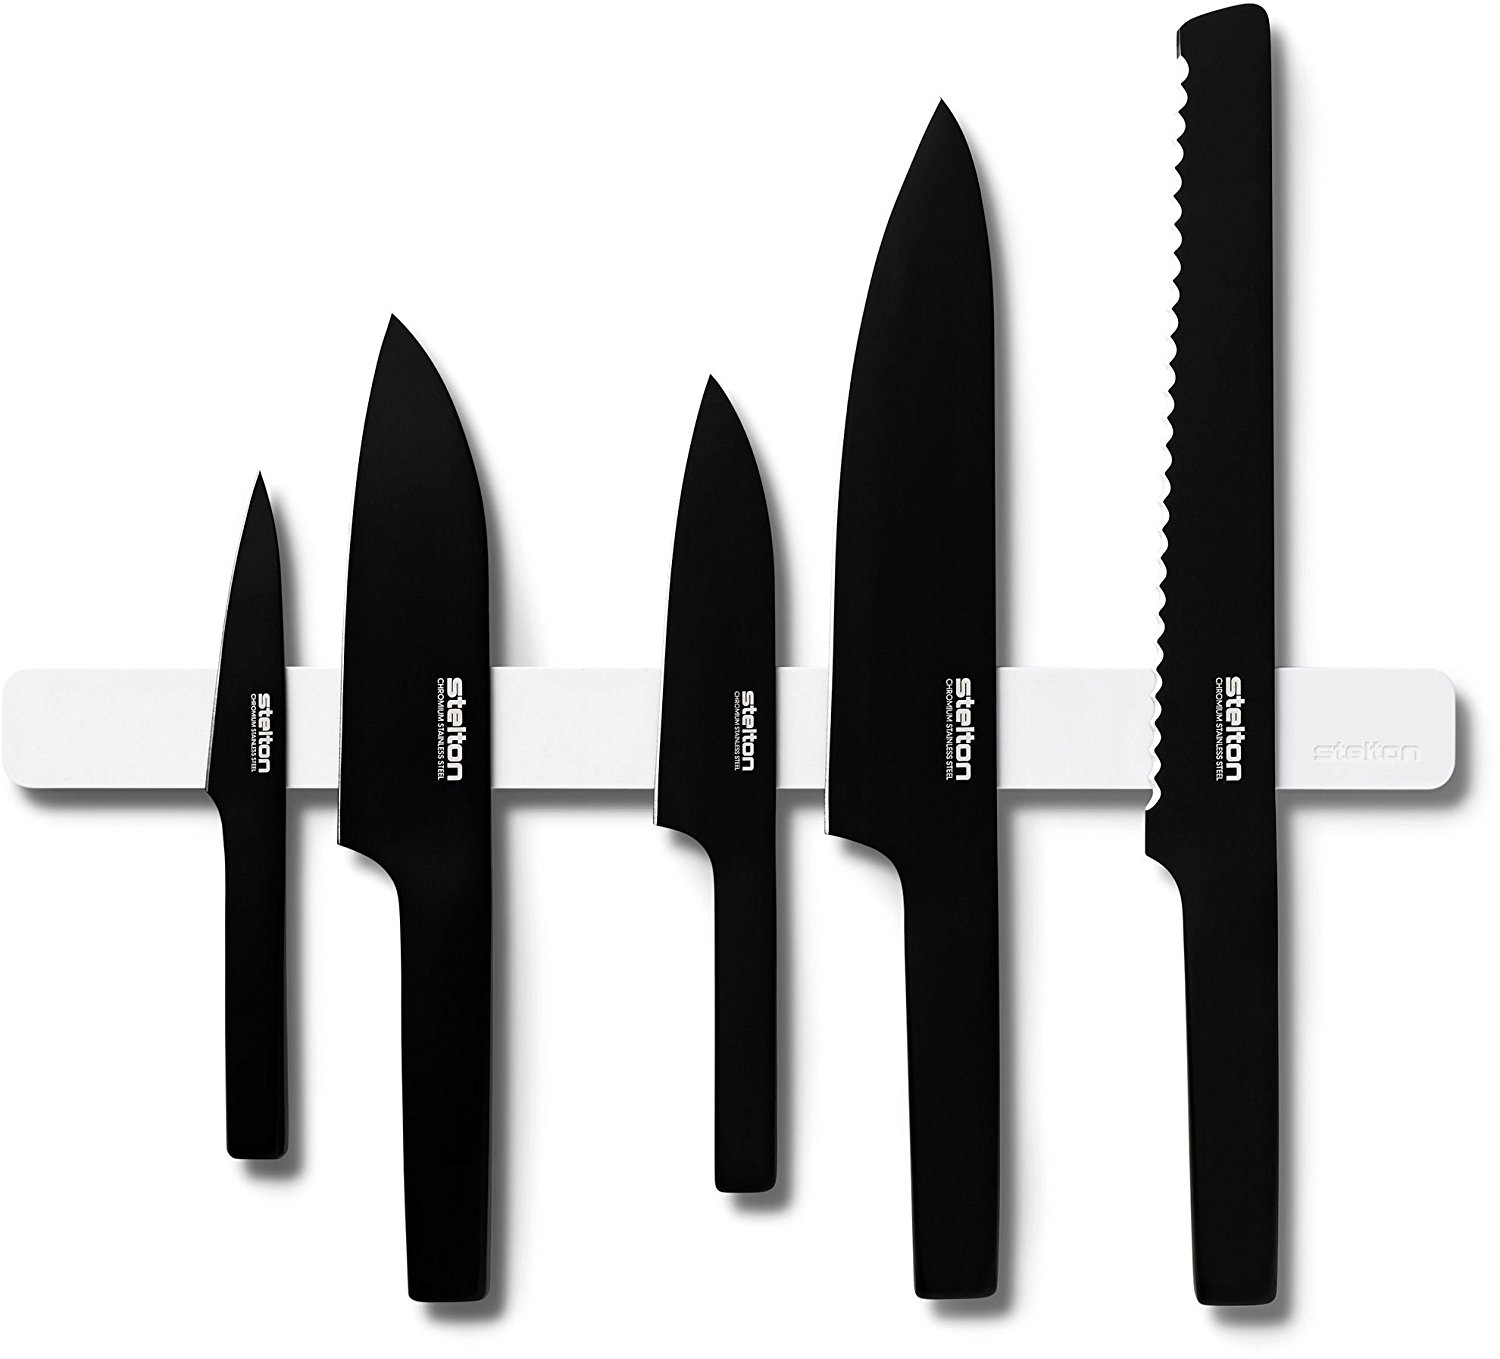 Stelton Pure Black Knives - Black All Black | All Things